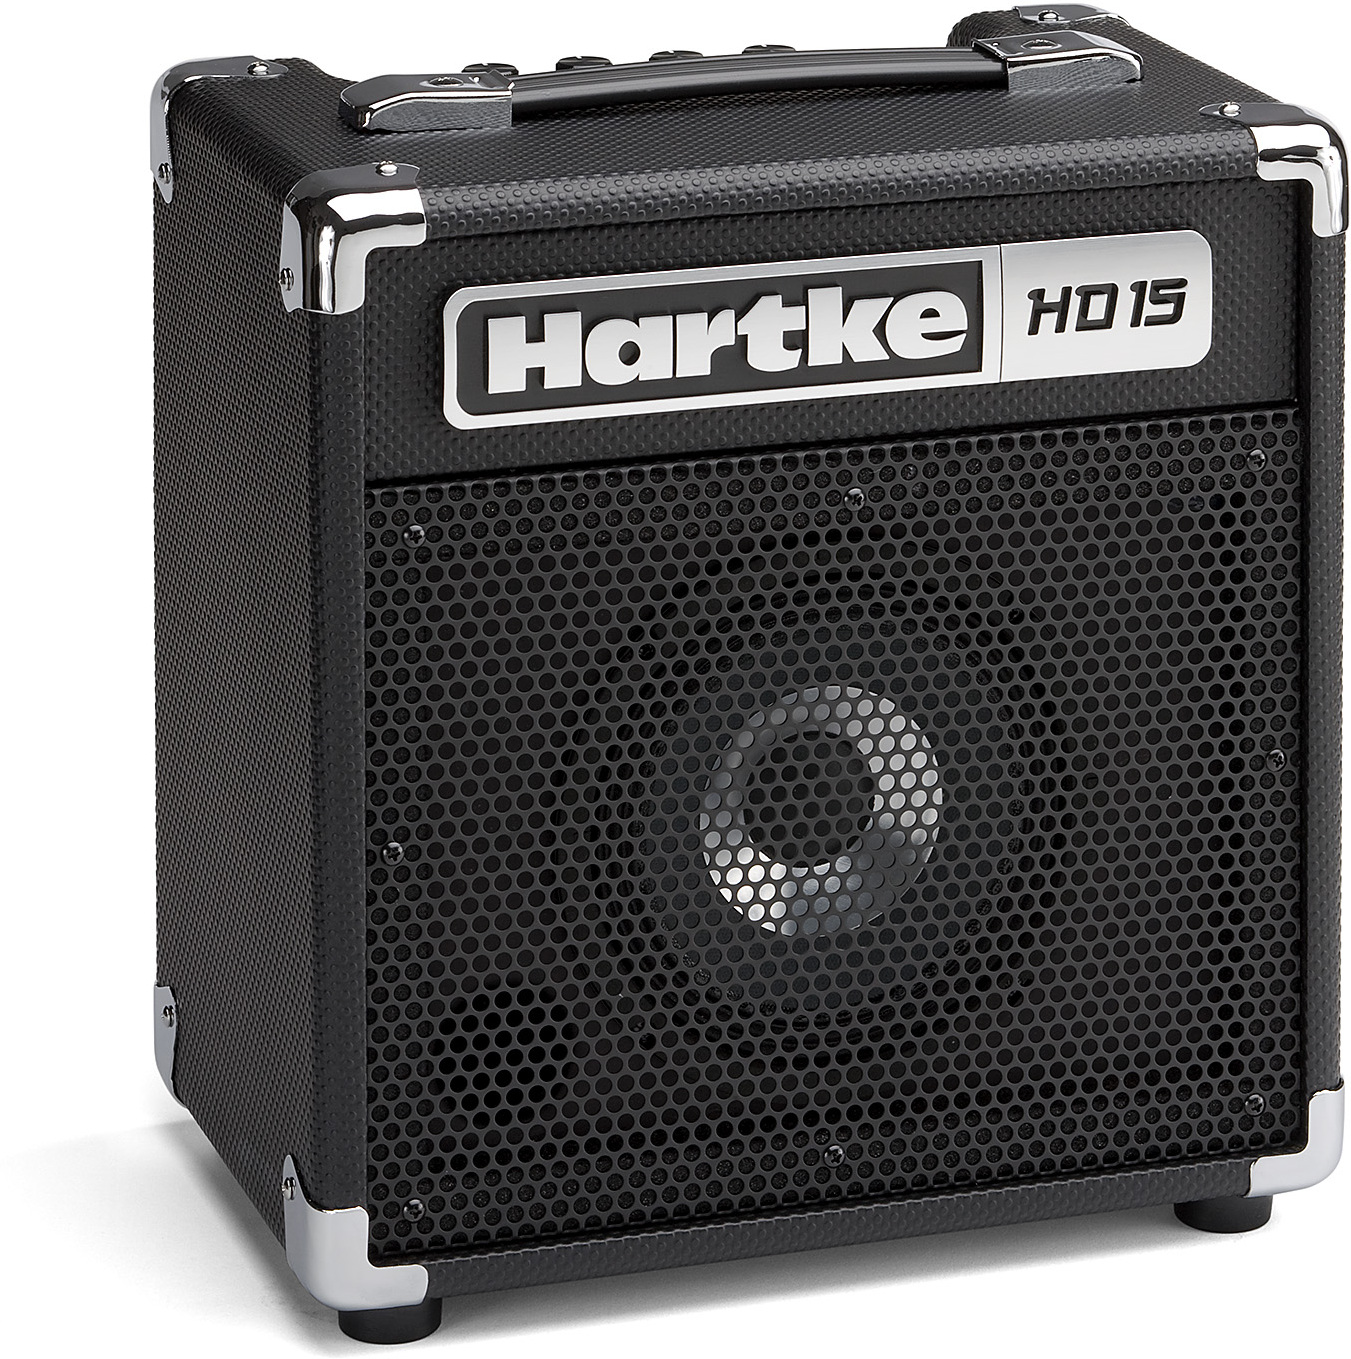 Hartke Hd15 Combo 6.5 - Bass Combo - Main picture